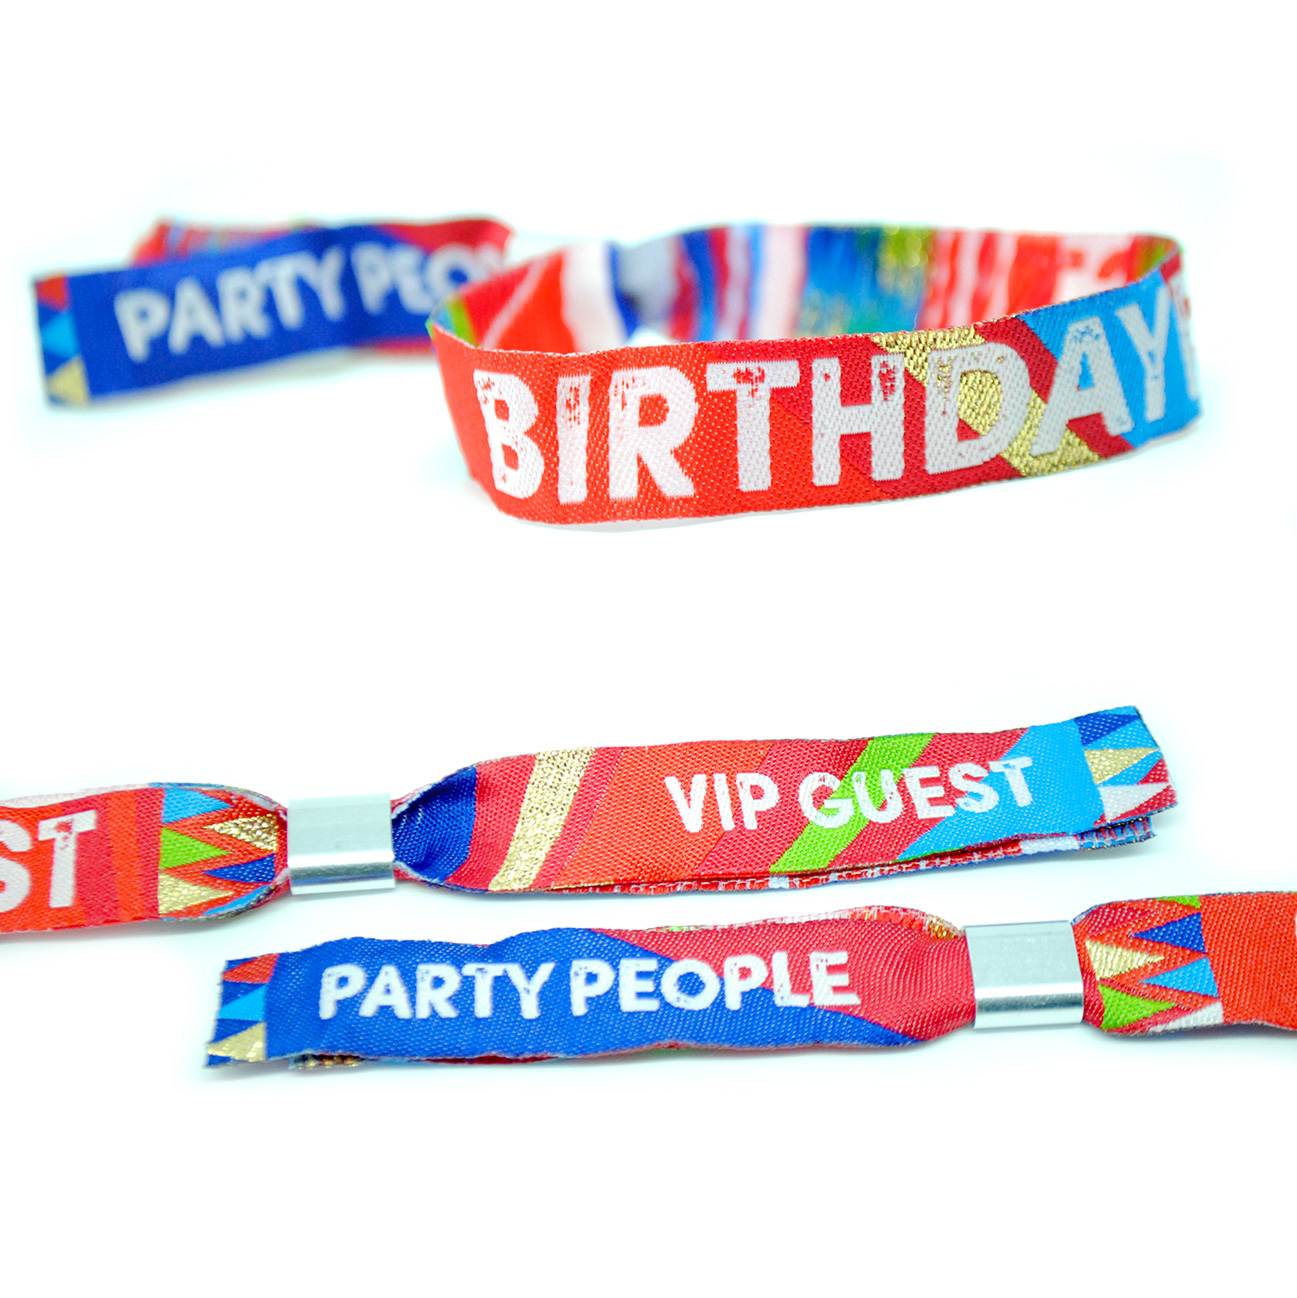 birthdayfest birthday party wristbands